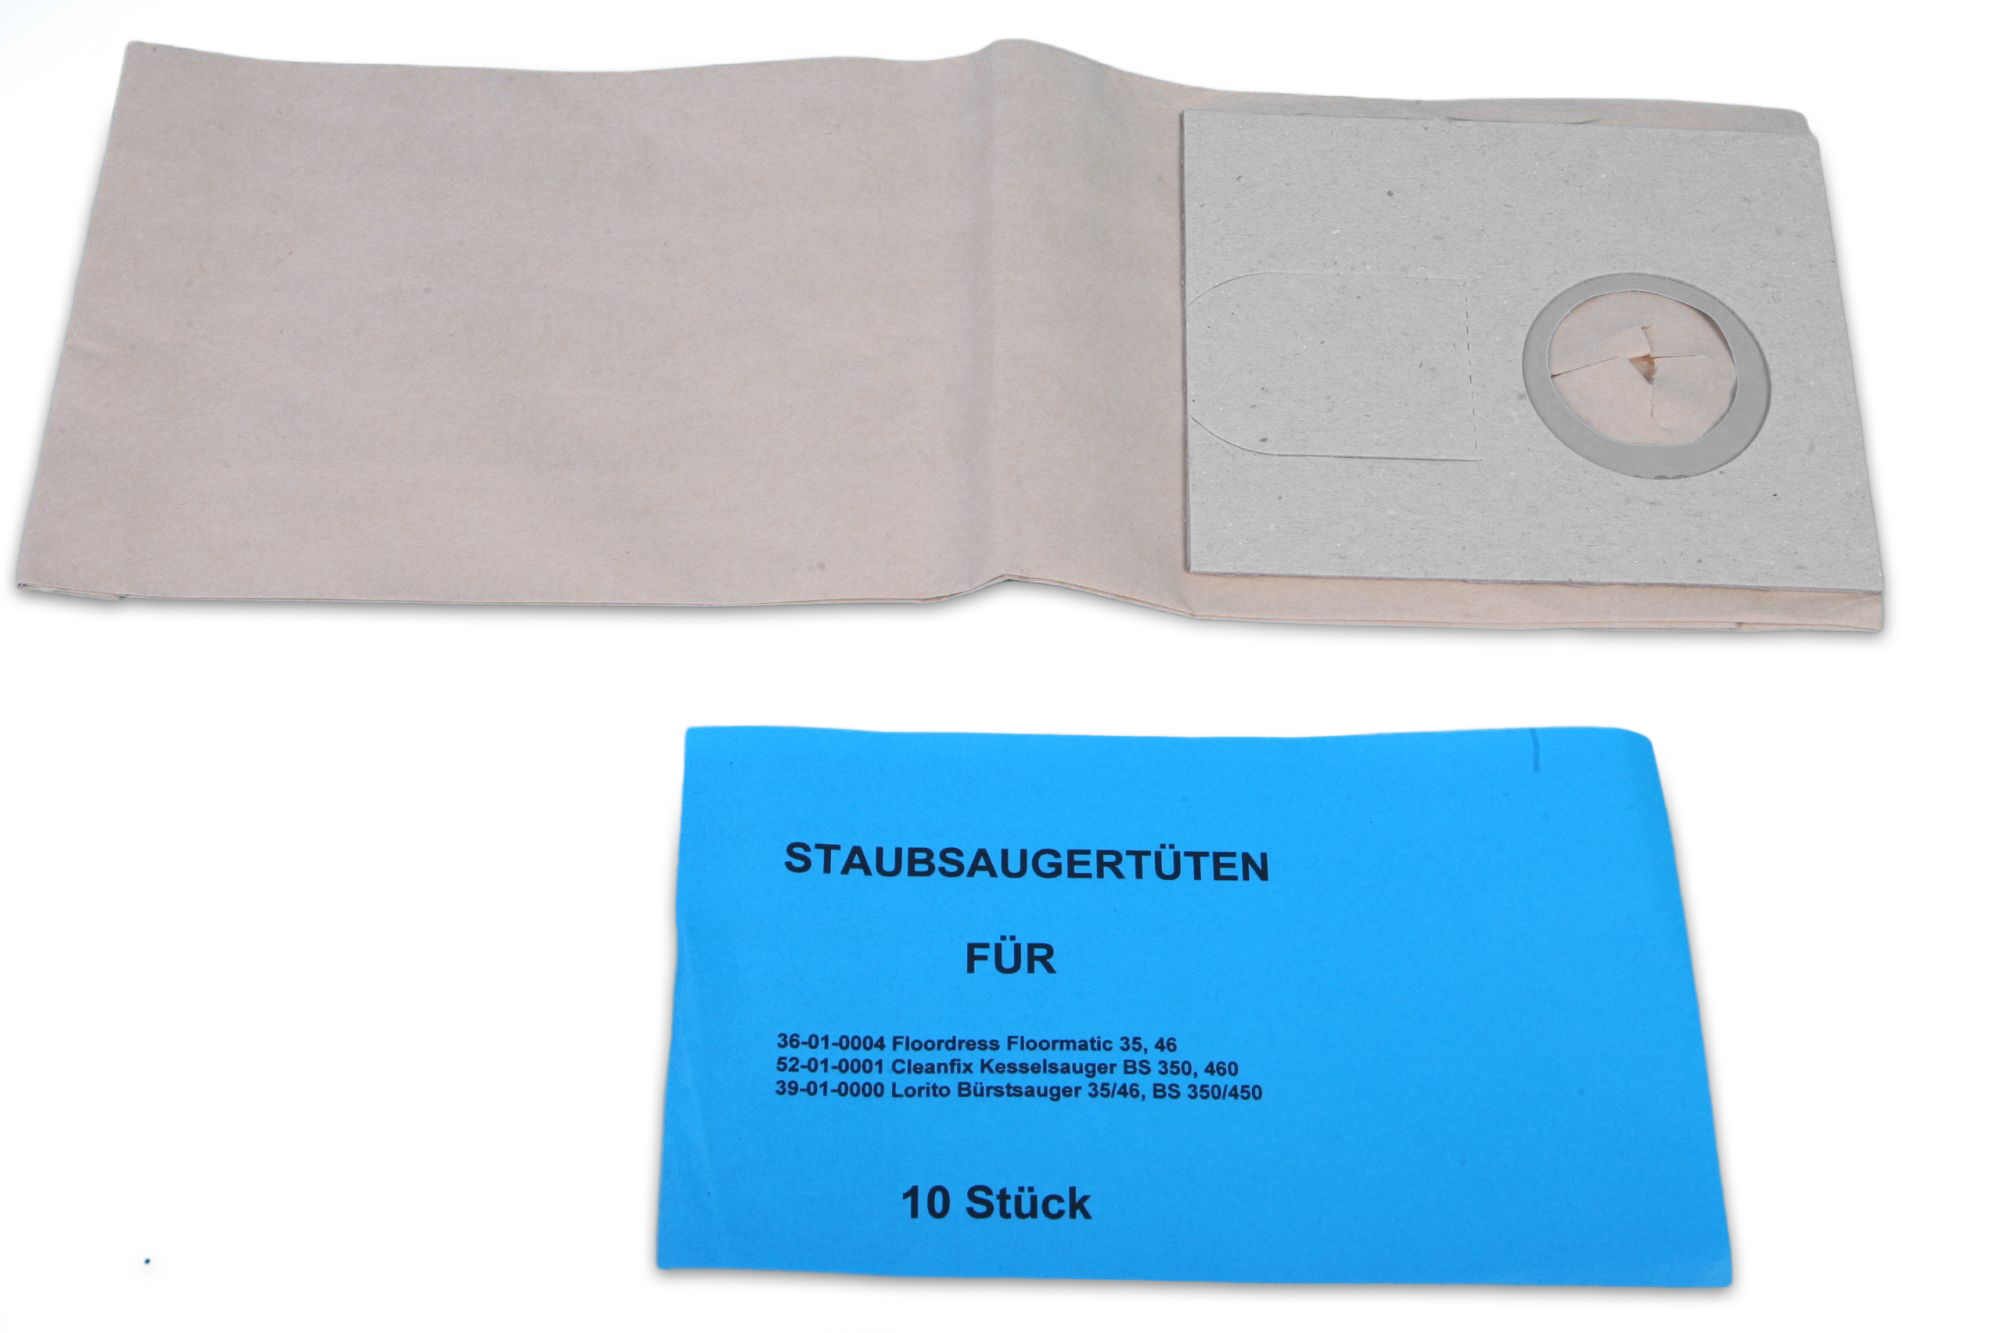 STAUBSAUGERLADEN.DE Staubsauger passend Cleanfix, Staubsaugerbeutel für Lorito Floordress, 10 Staubbeutel